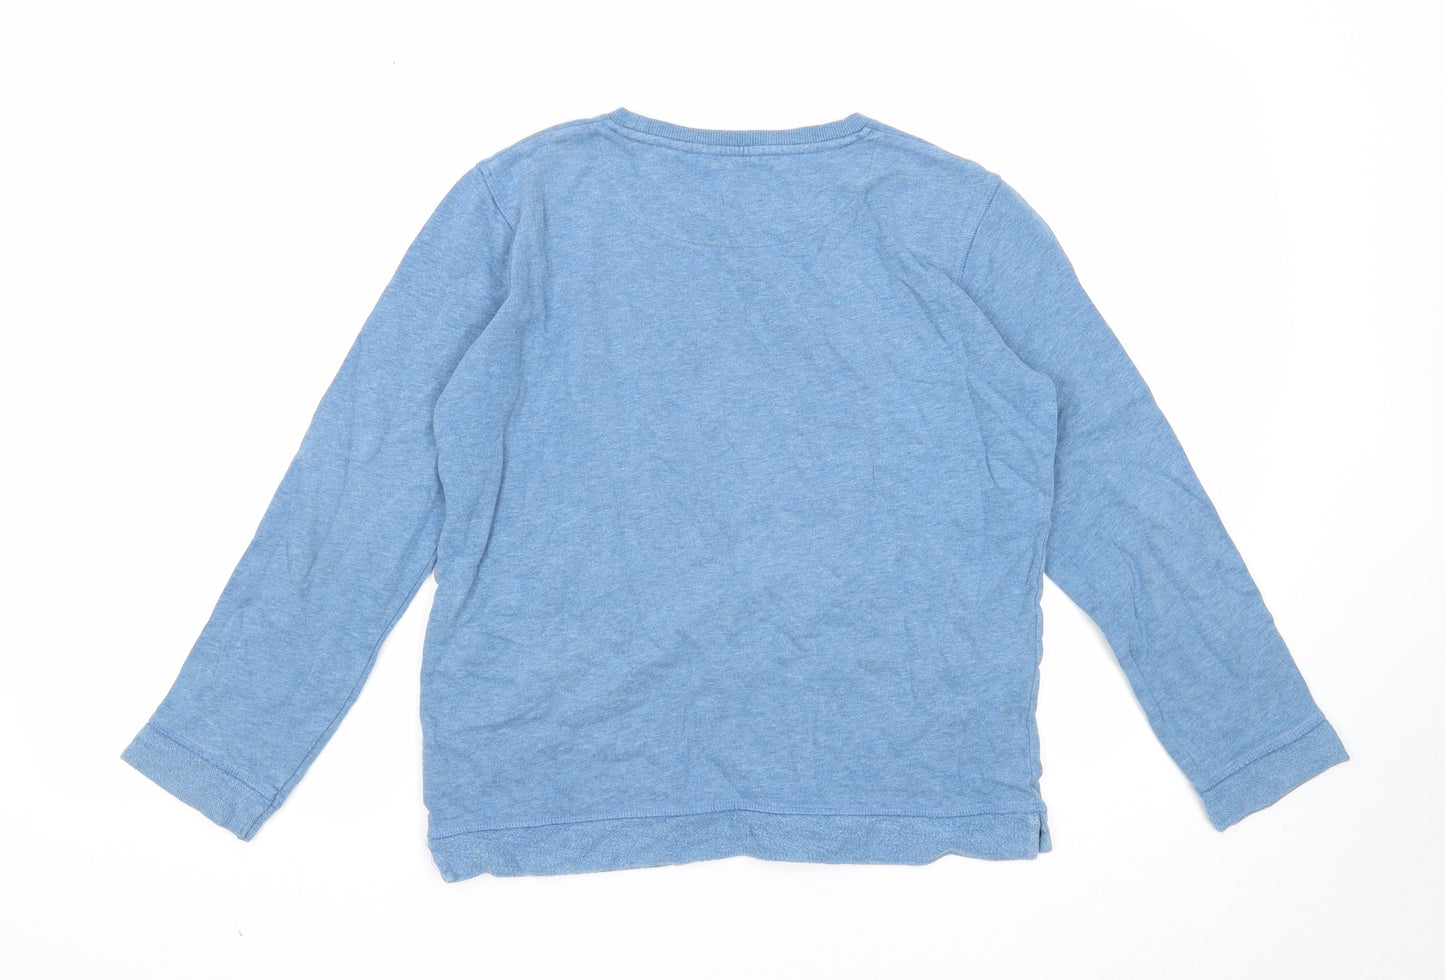 John Lewis Boys Blue Cotton Pullover Sweatshirt Size 12 Years Pullover - Venice